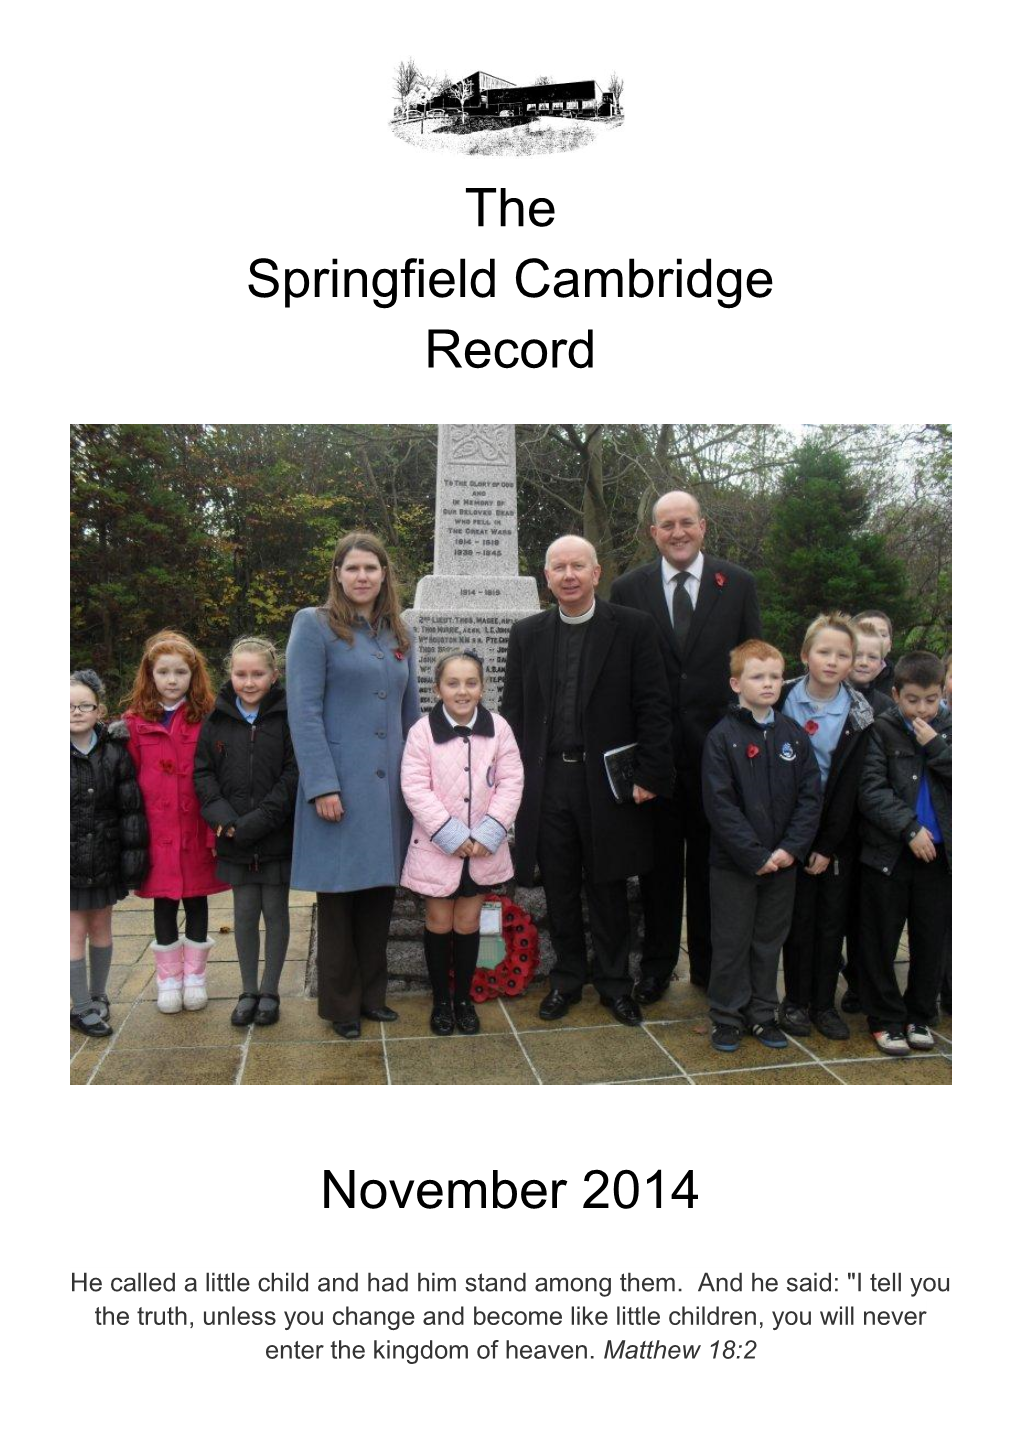 The Springfield Cambridge Record November 2014